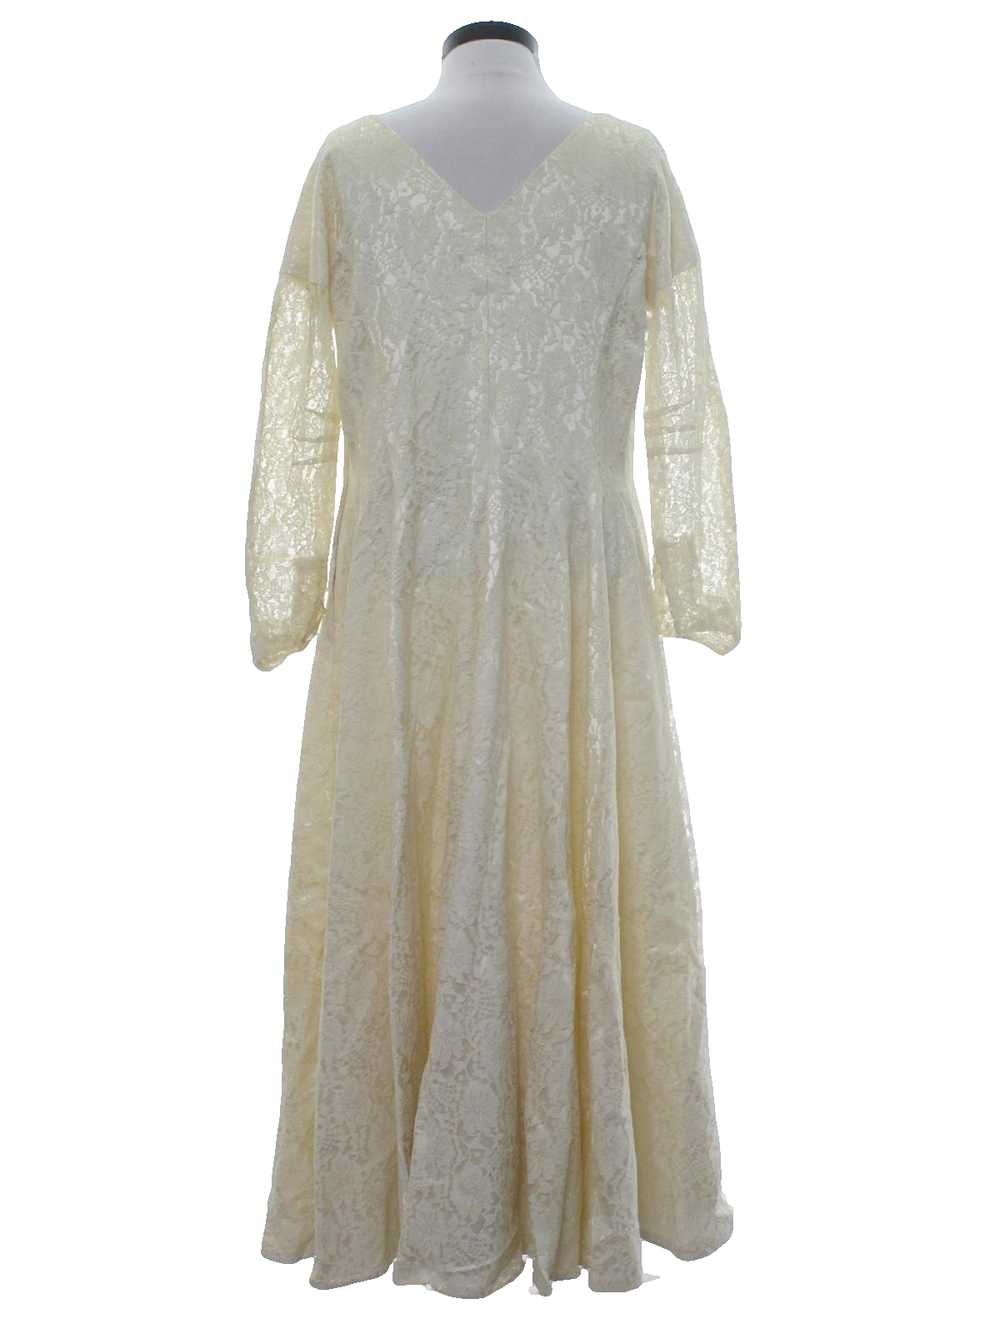 1950's Wedding Maxi Dress - image 3